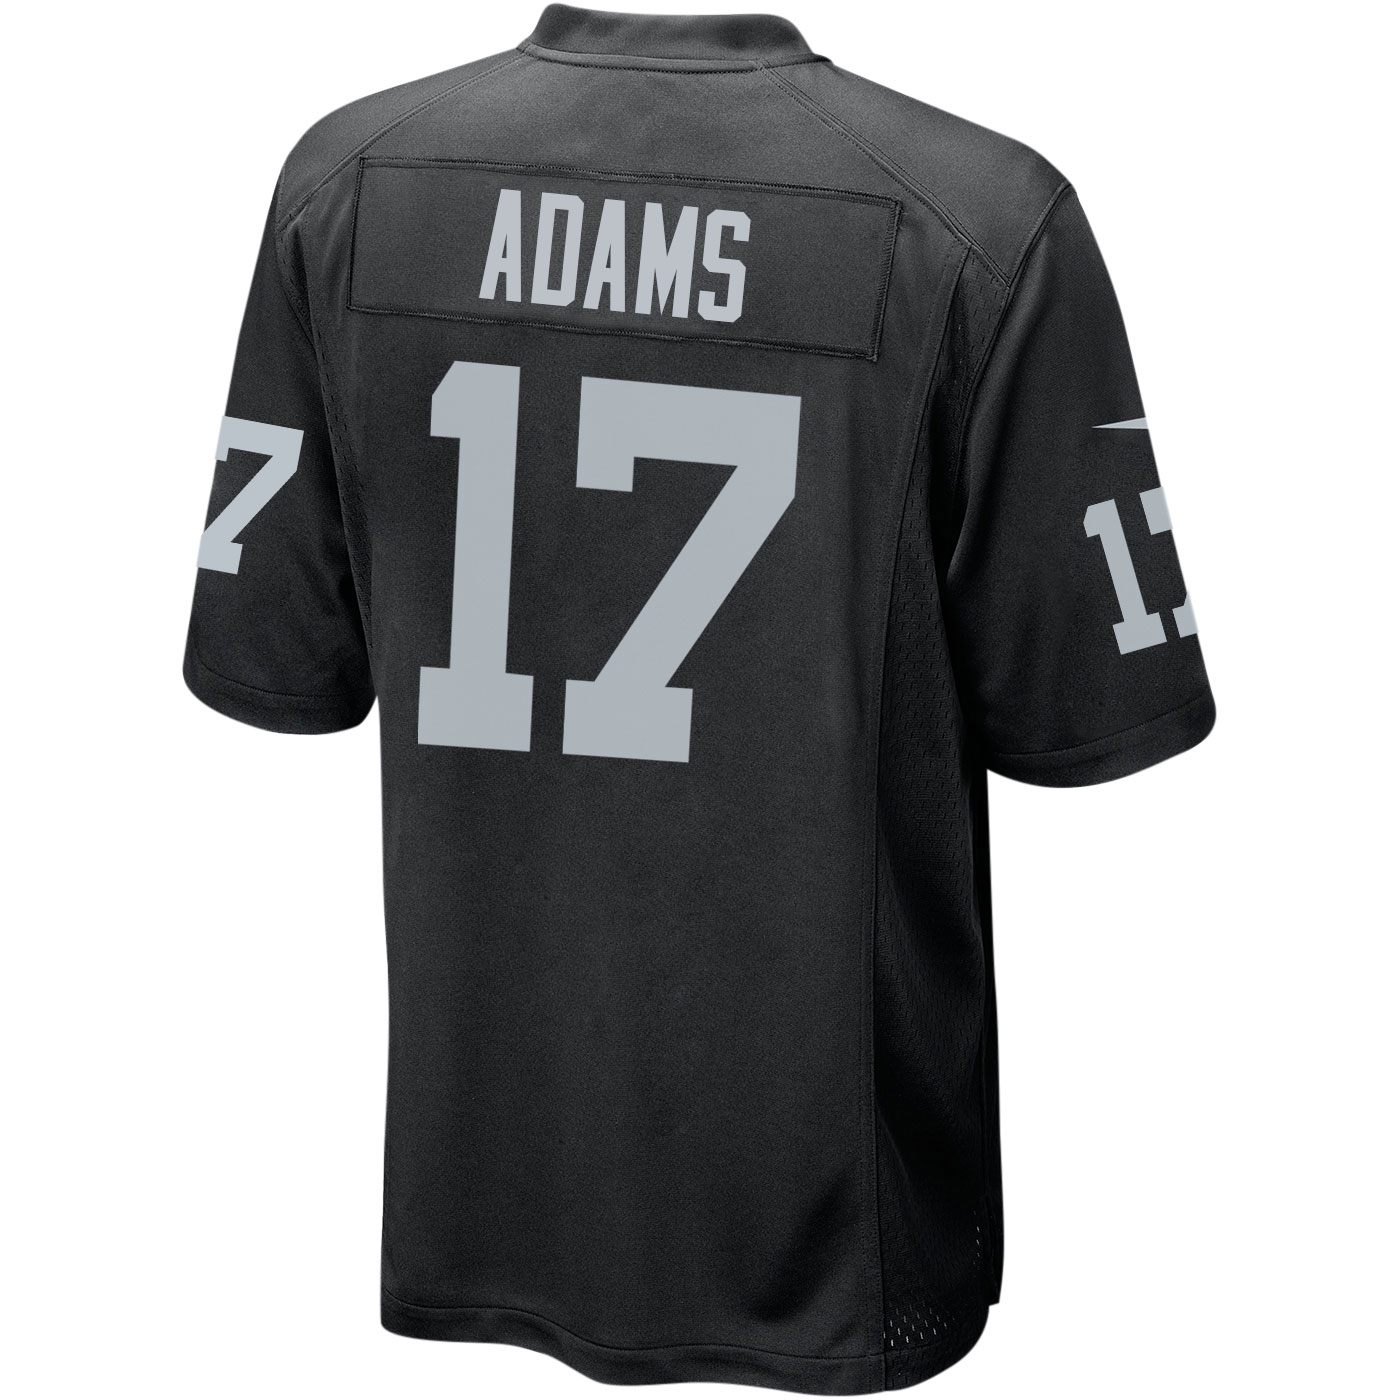 Nike NFL Las Vegas Raiders (Davante Adams) Men's Game Football Jersey - Black XL